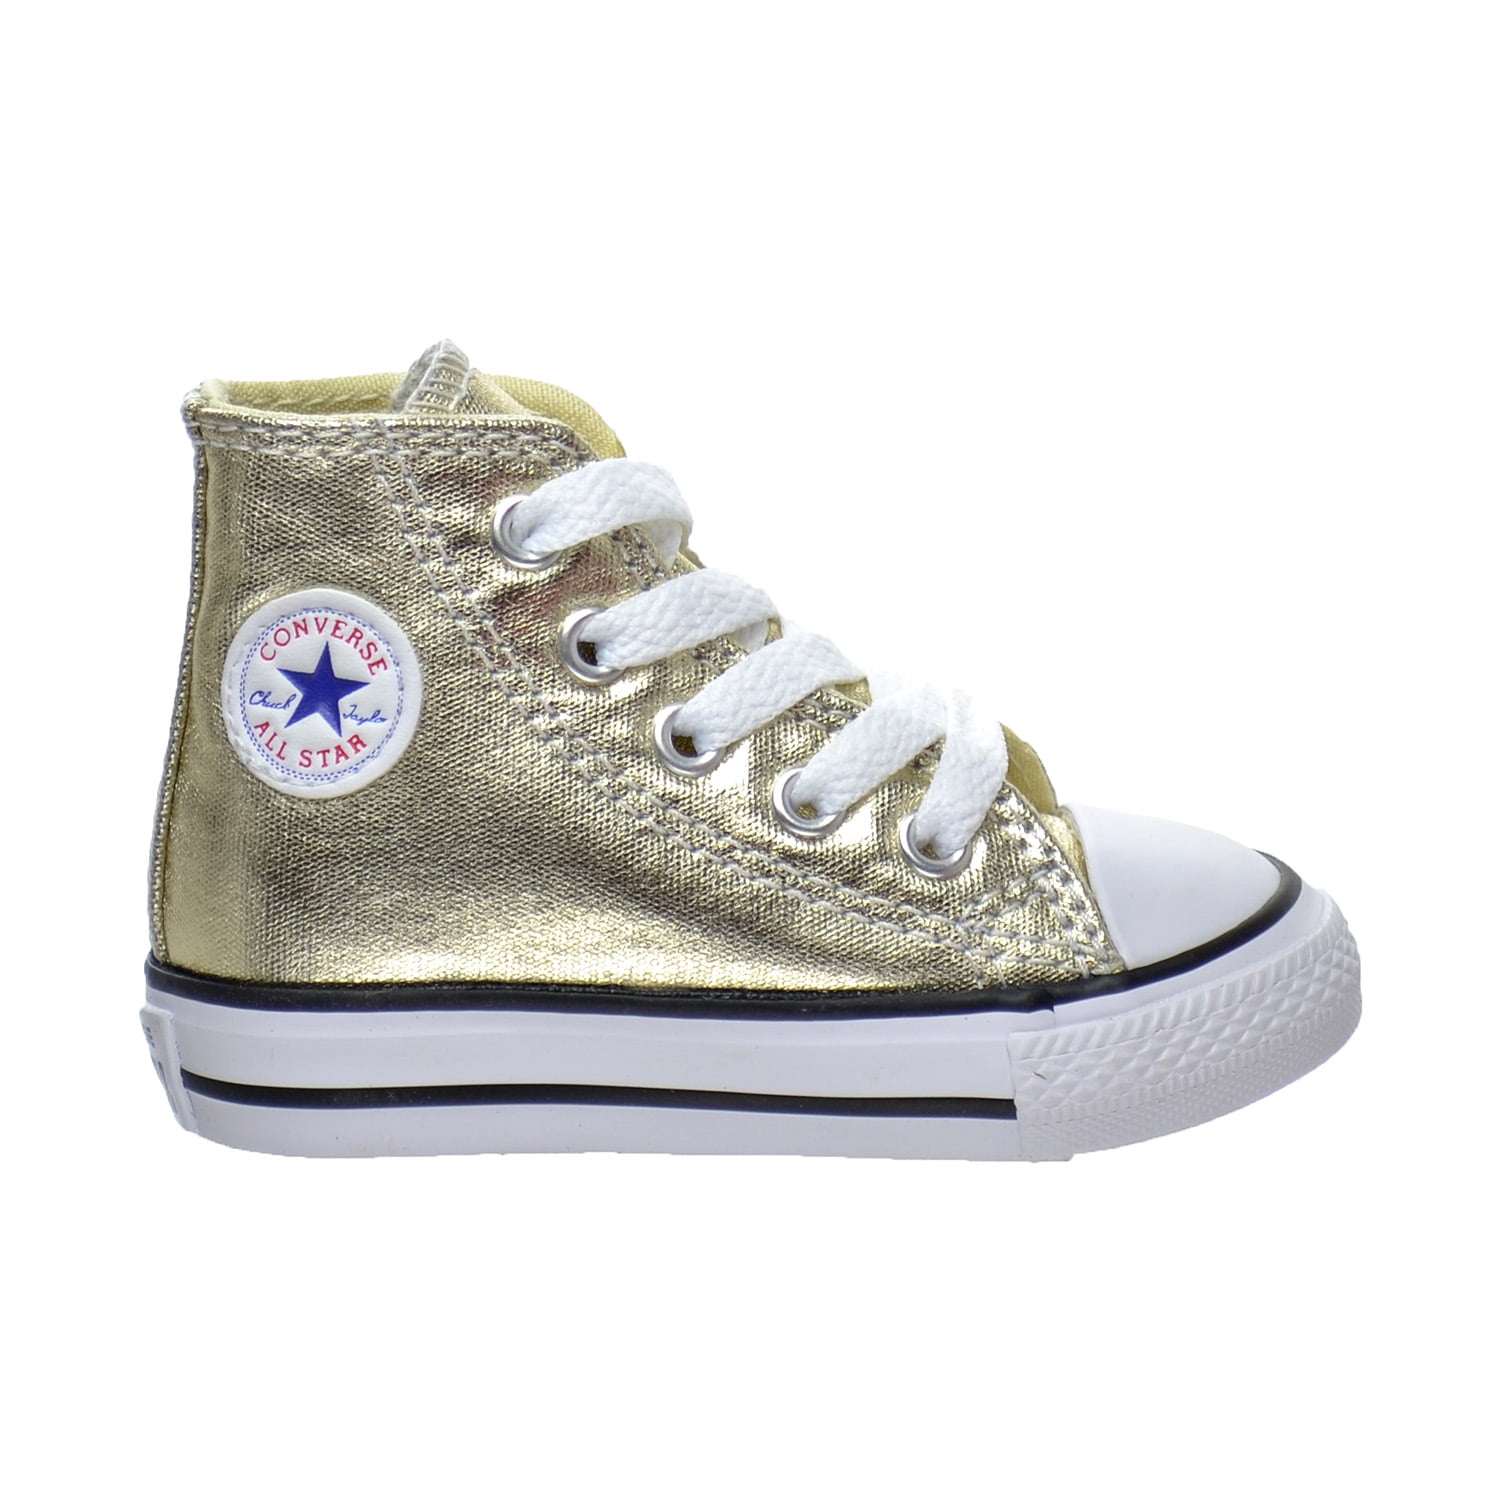 Converse Chuck Taylor All Star High Top Toddler's Light Gold/White 753178f Walmart.com